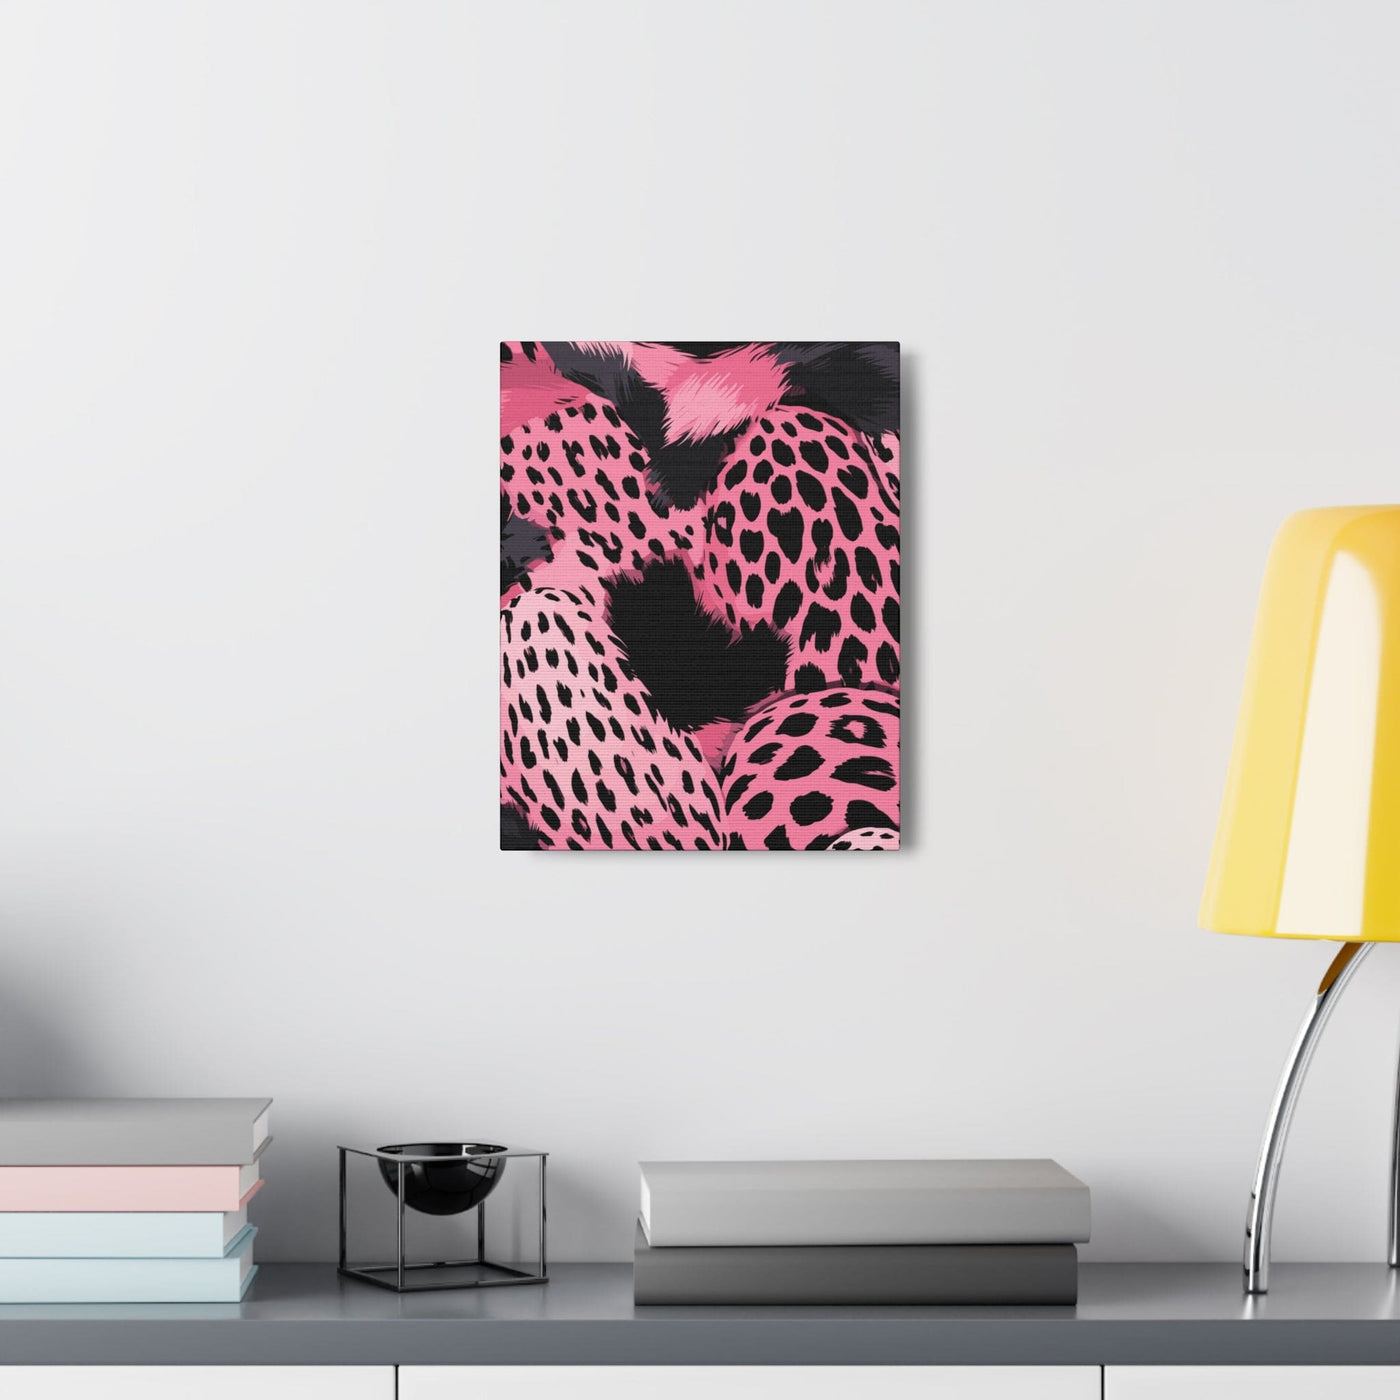 Wall Art Decor Canvas Print Artwork Pink And Black Leopard Spots Illustration